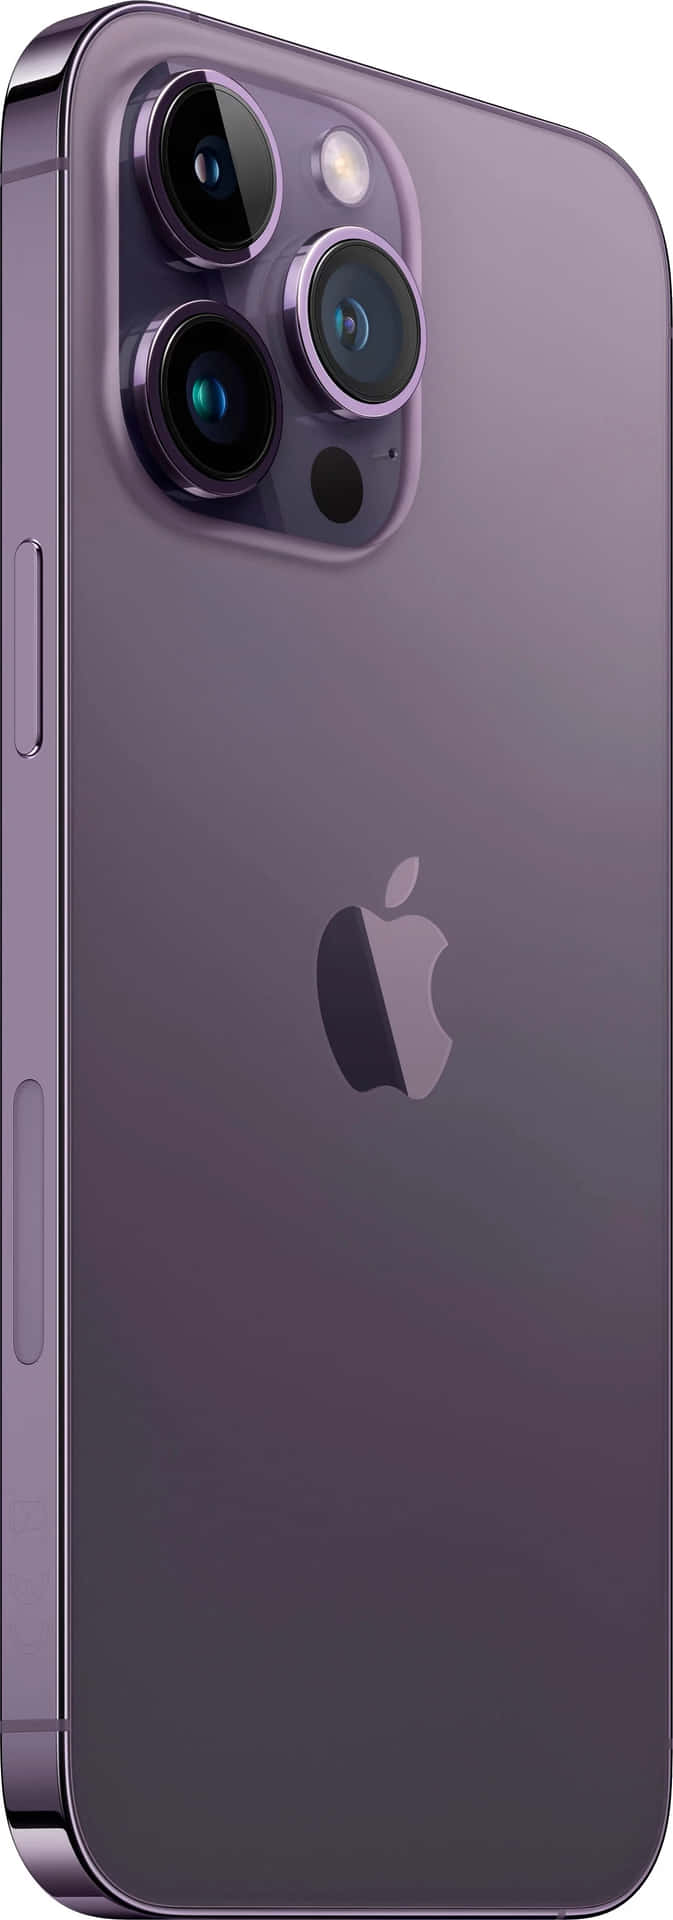 Purplei Phone14 Pro Max Rear Camera View Wallpaper